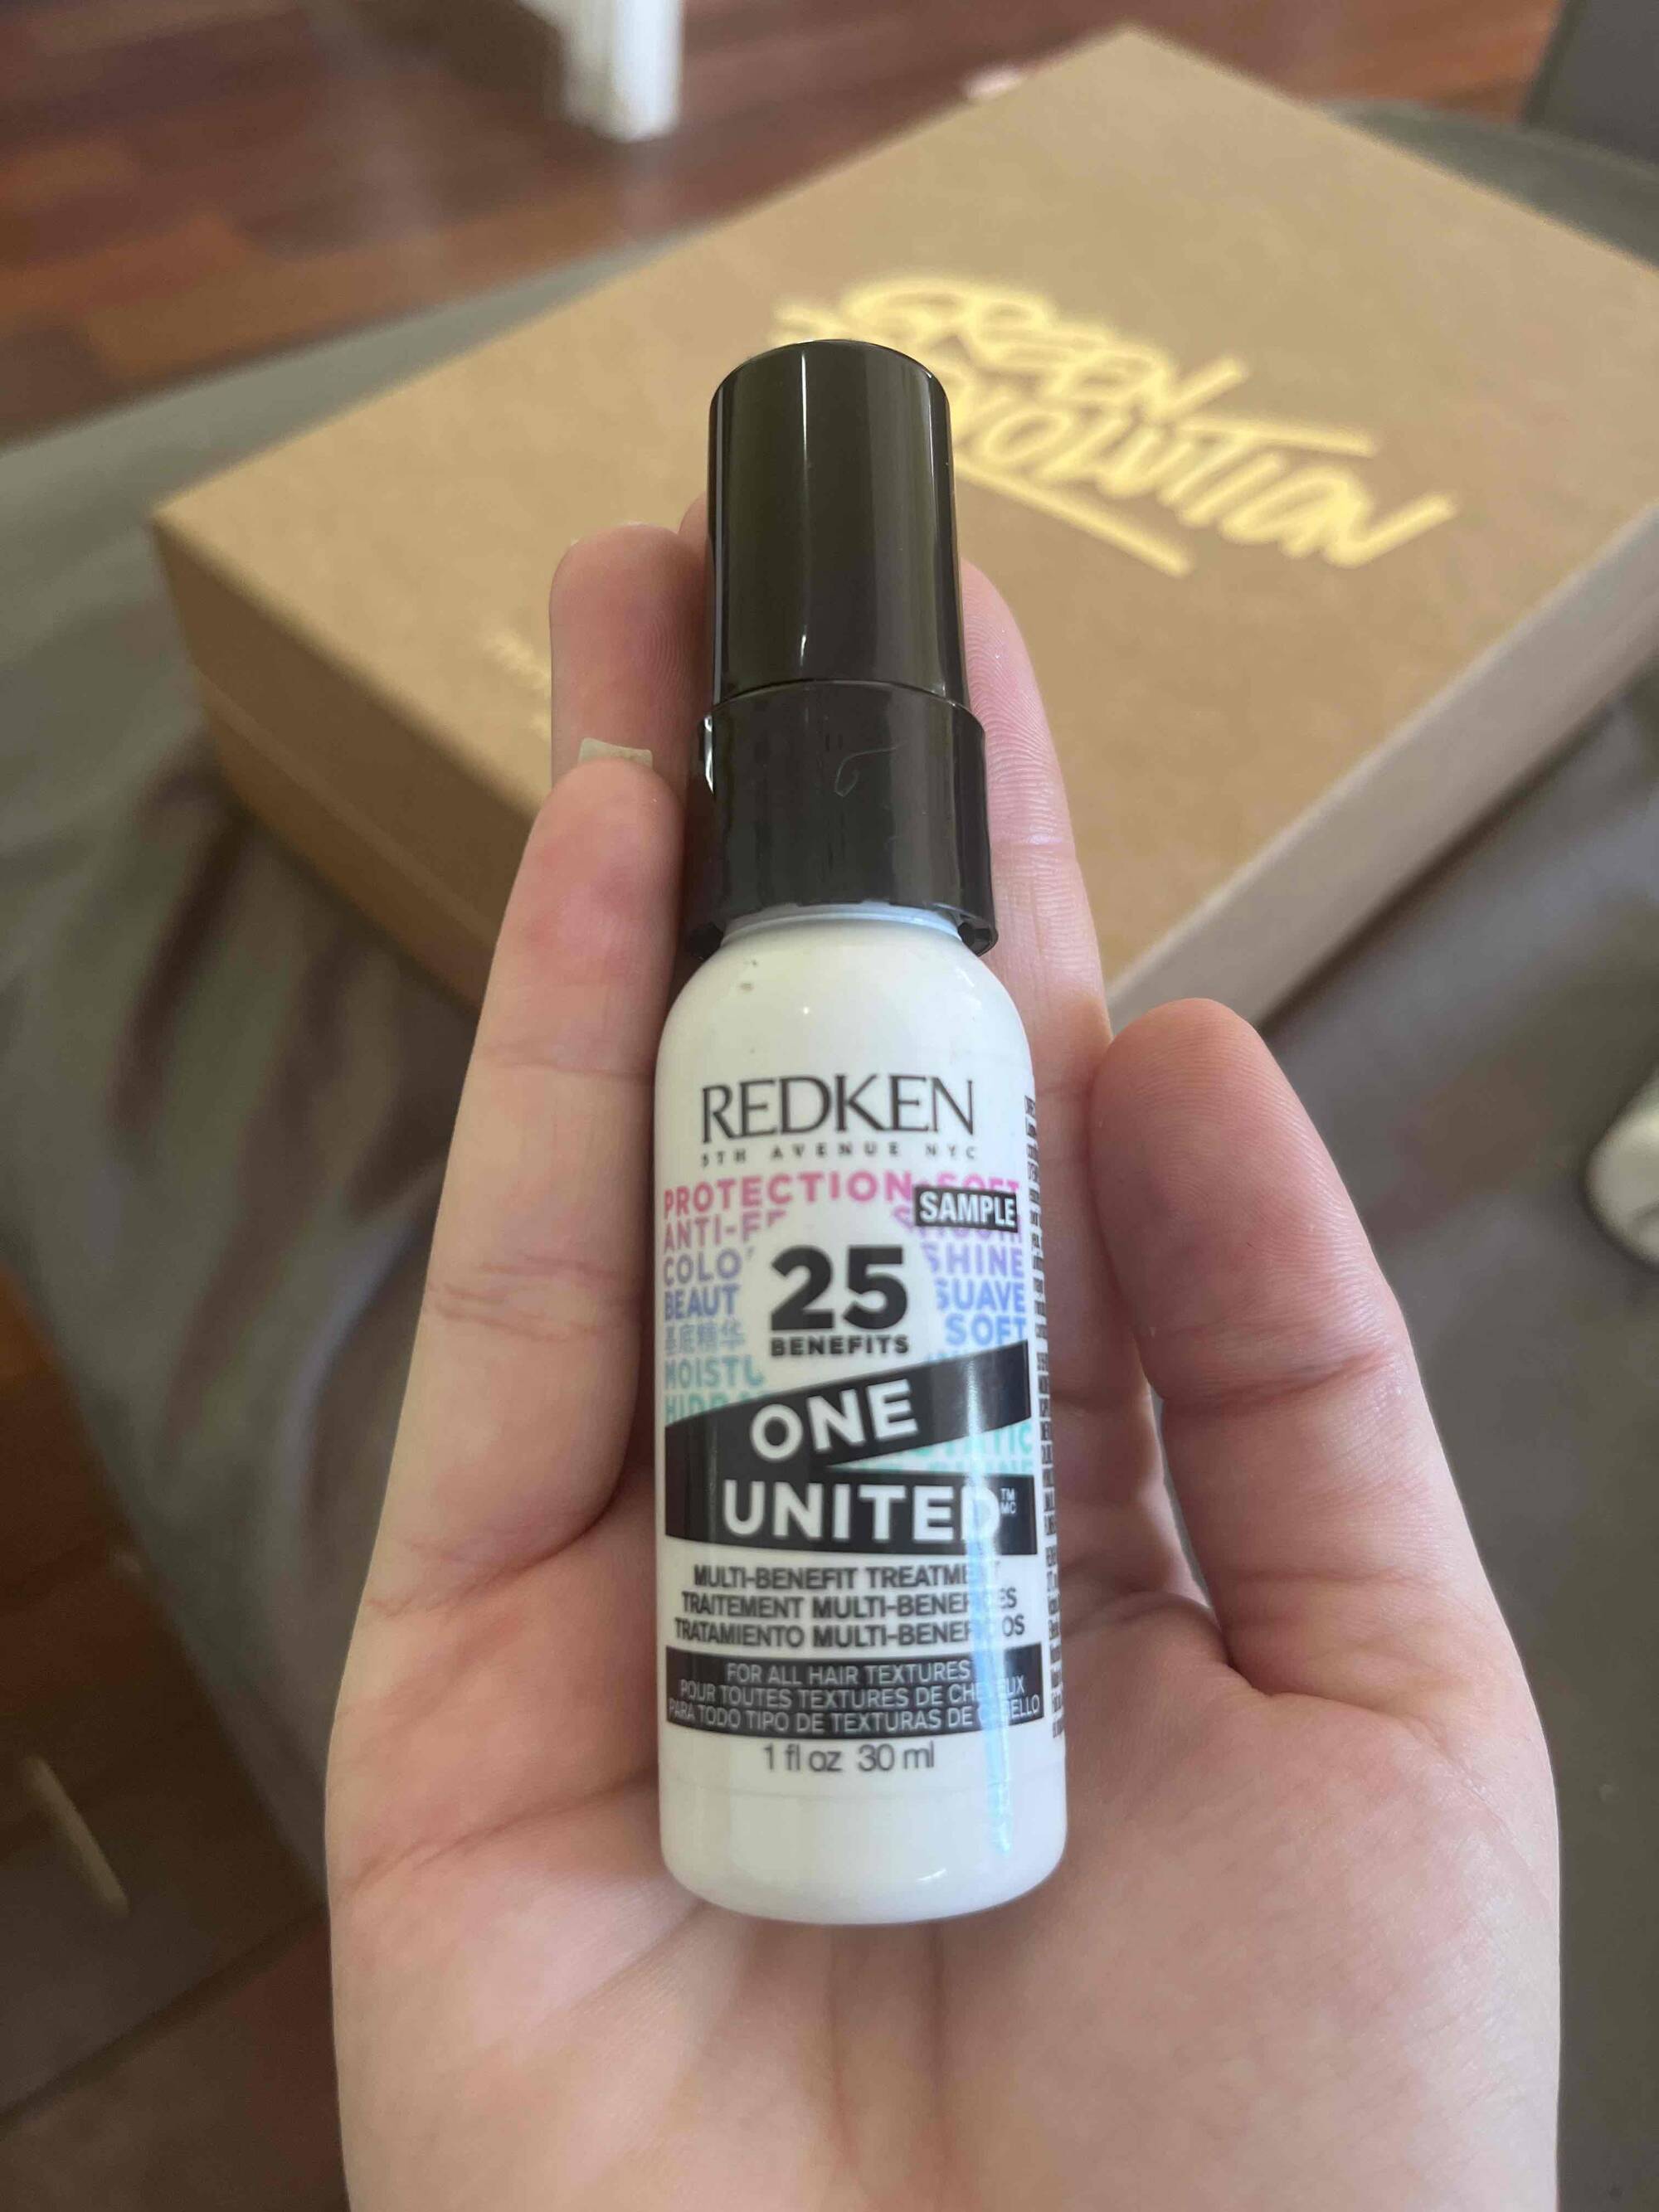 REDKEN - One united 25 benefits treatment